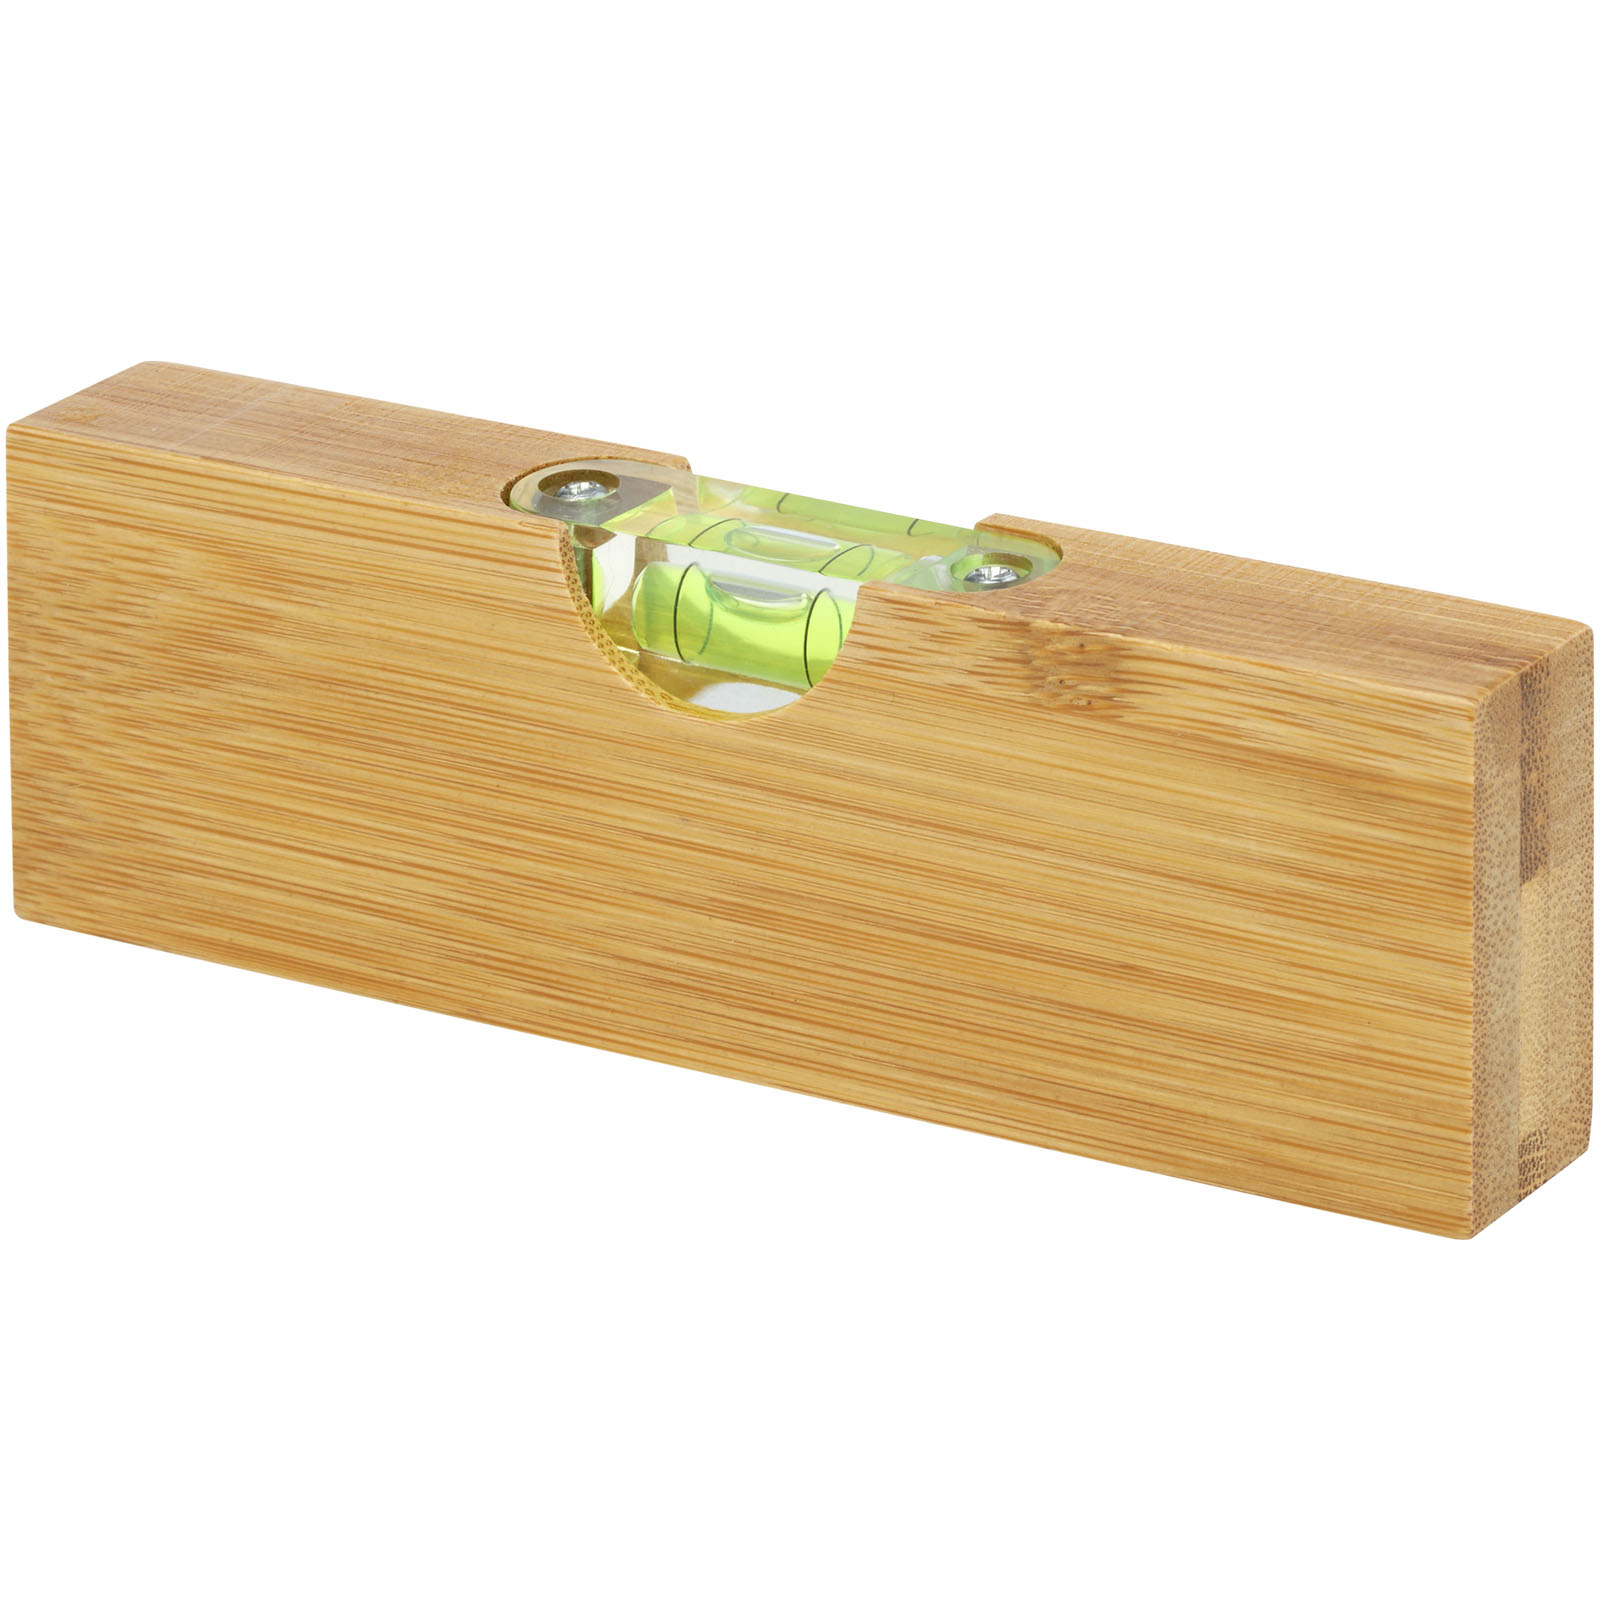 Tool sets - Flush bamboo spirit level with bottle opener